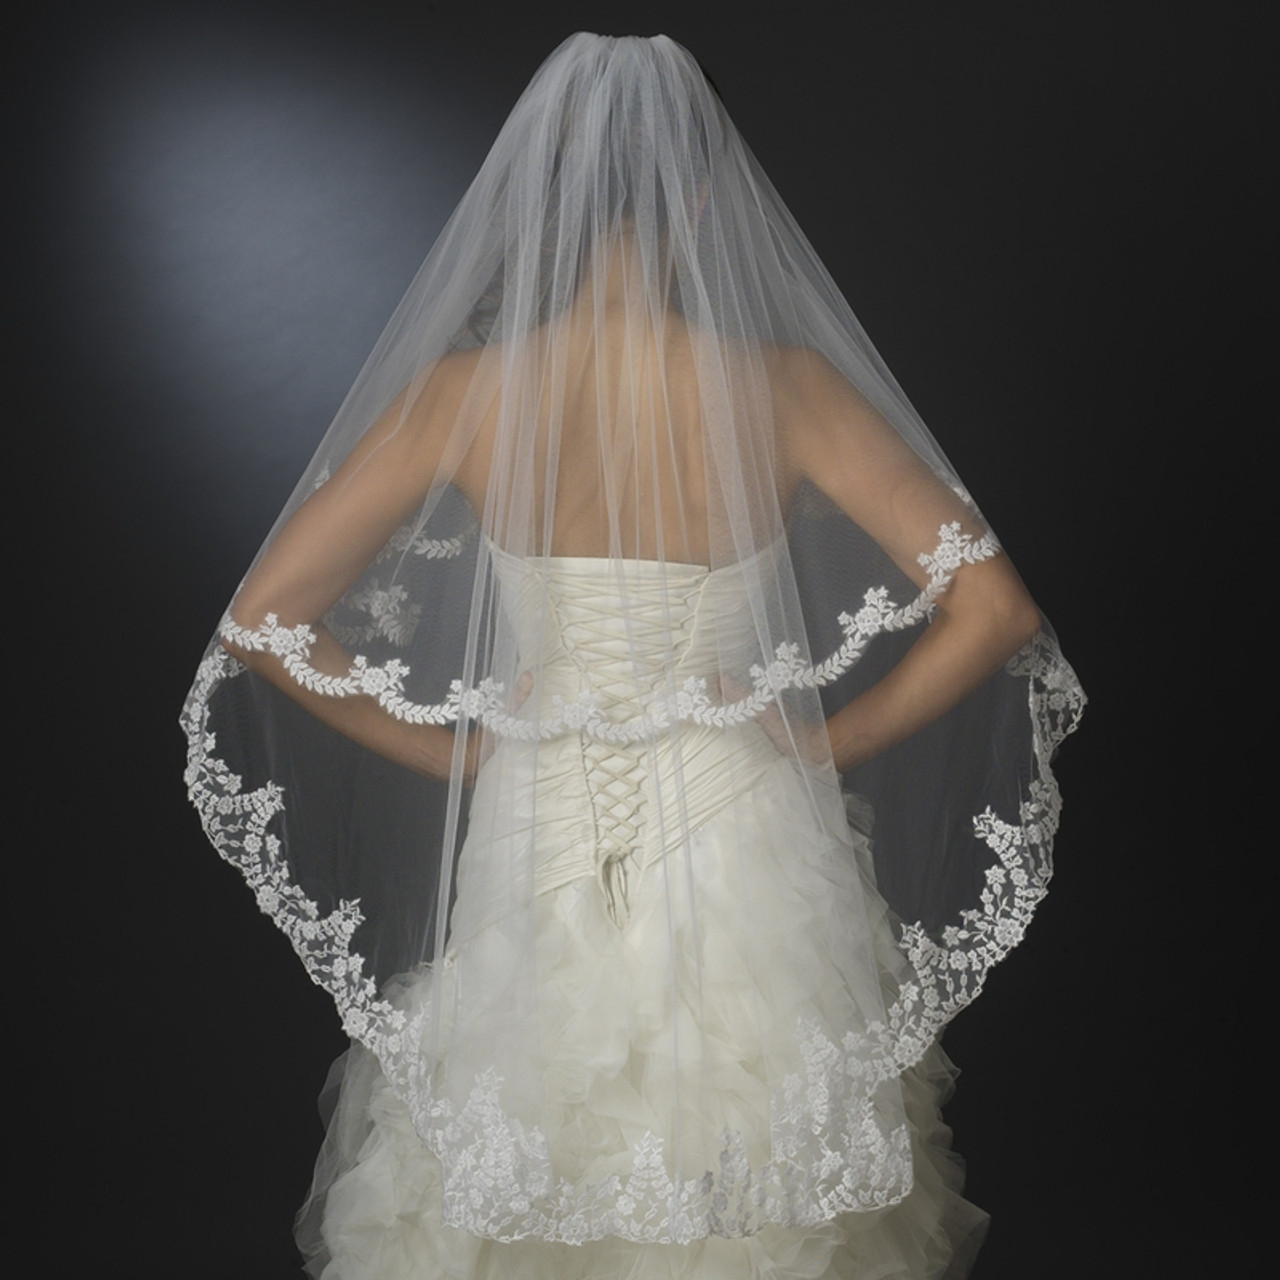 Embroidered Lace Wedding Veil Fingertip Length Veil - VQ